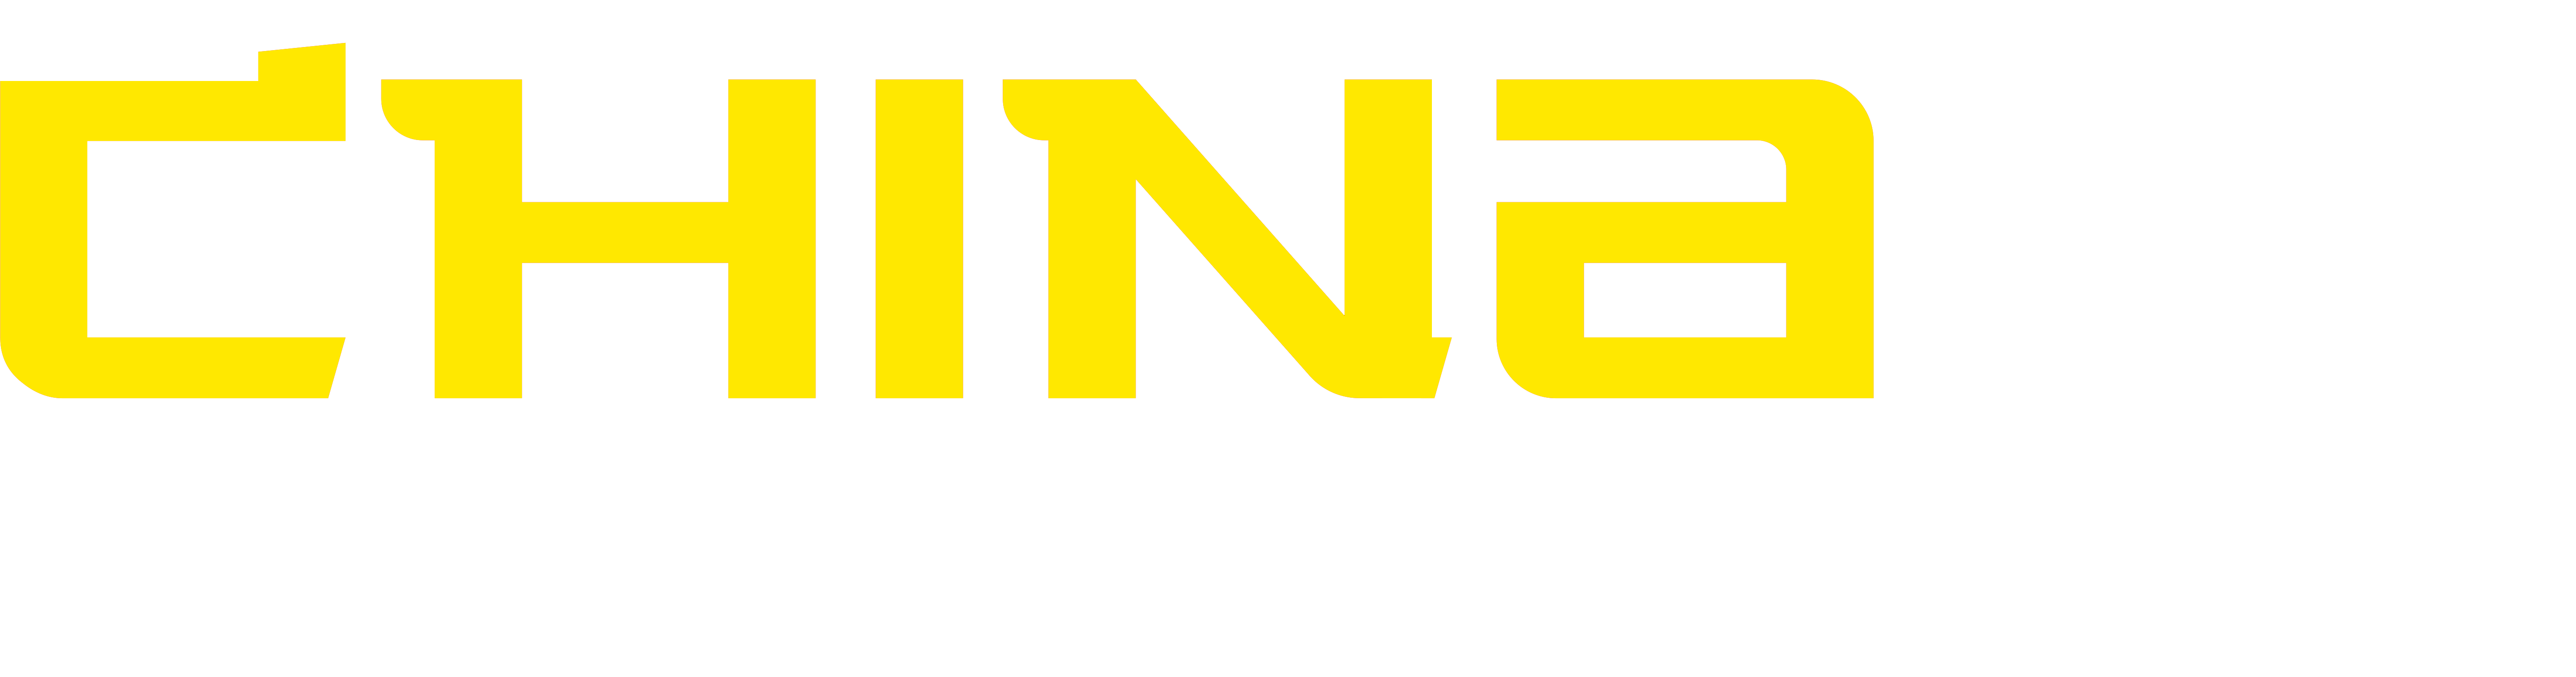 China Home Life Logo 1